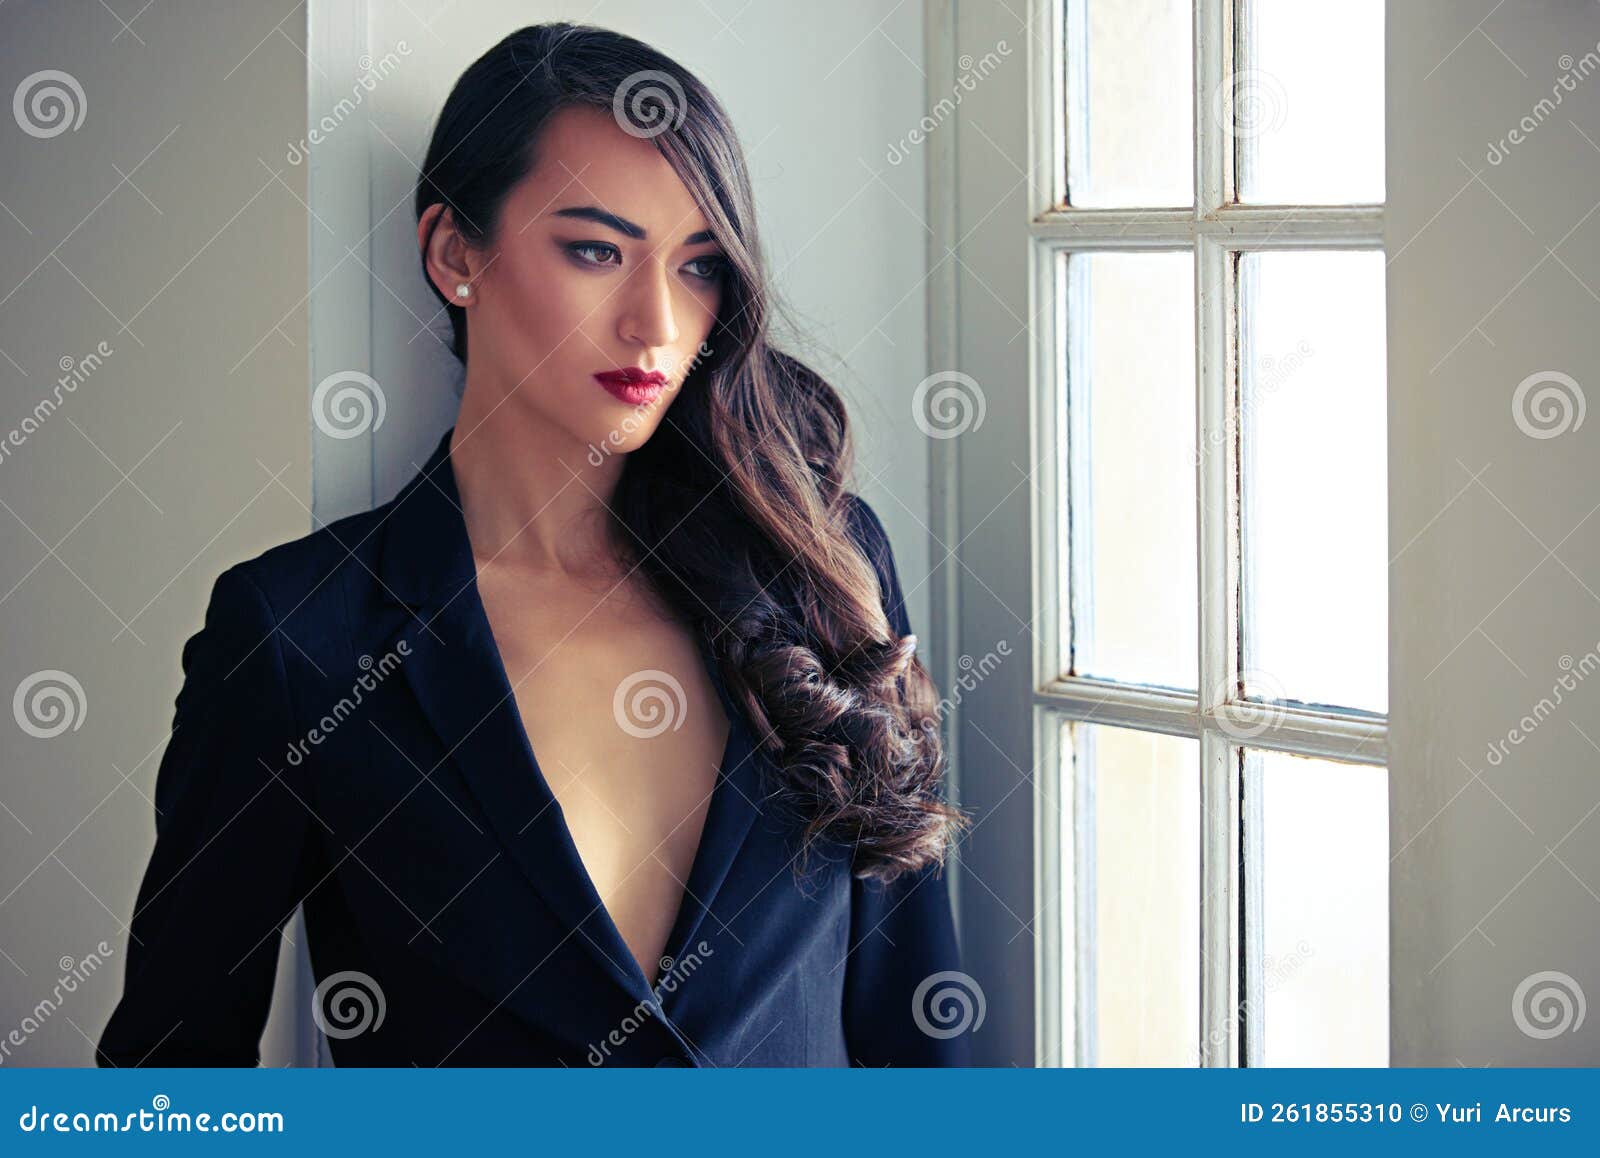 True French Style. a Beautiful Woman Wearing a Classic Feminine Suit Posing  Alongside French Doors. Stock Photo - Image of beautiful, beauty: 261855310